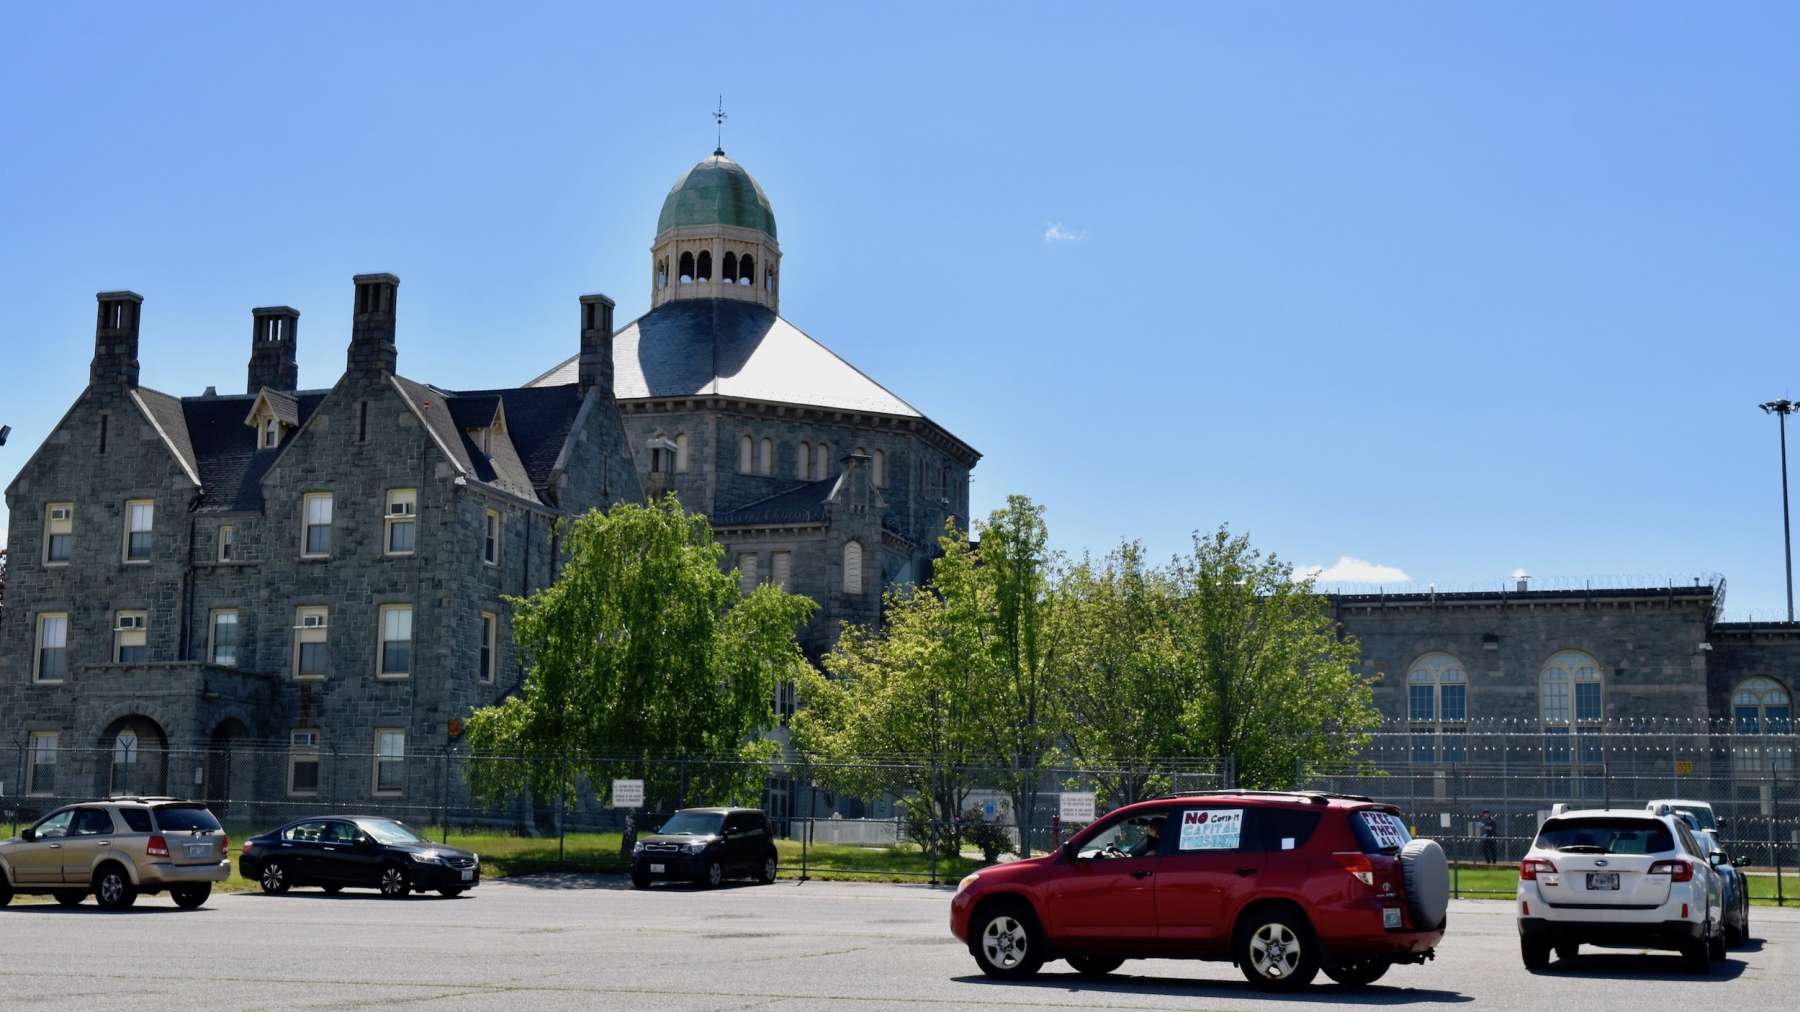 Rhode Island News: Growing calls for McKee to shut down inhumane, unconstitutional maximum security prison